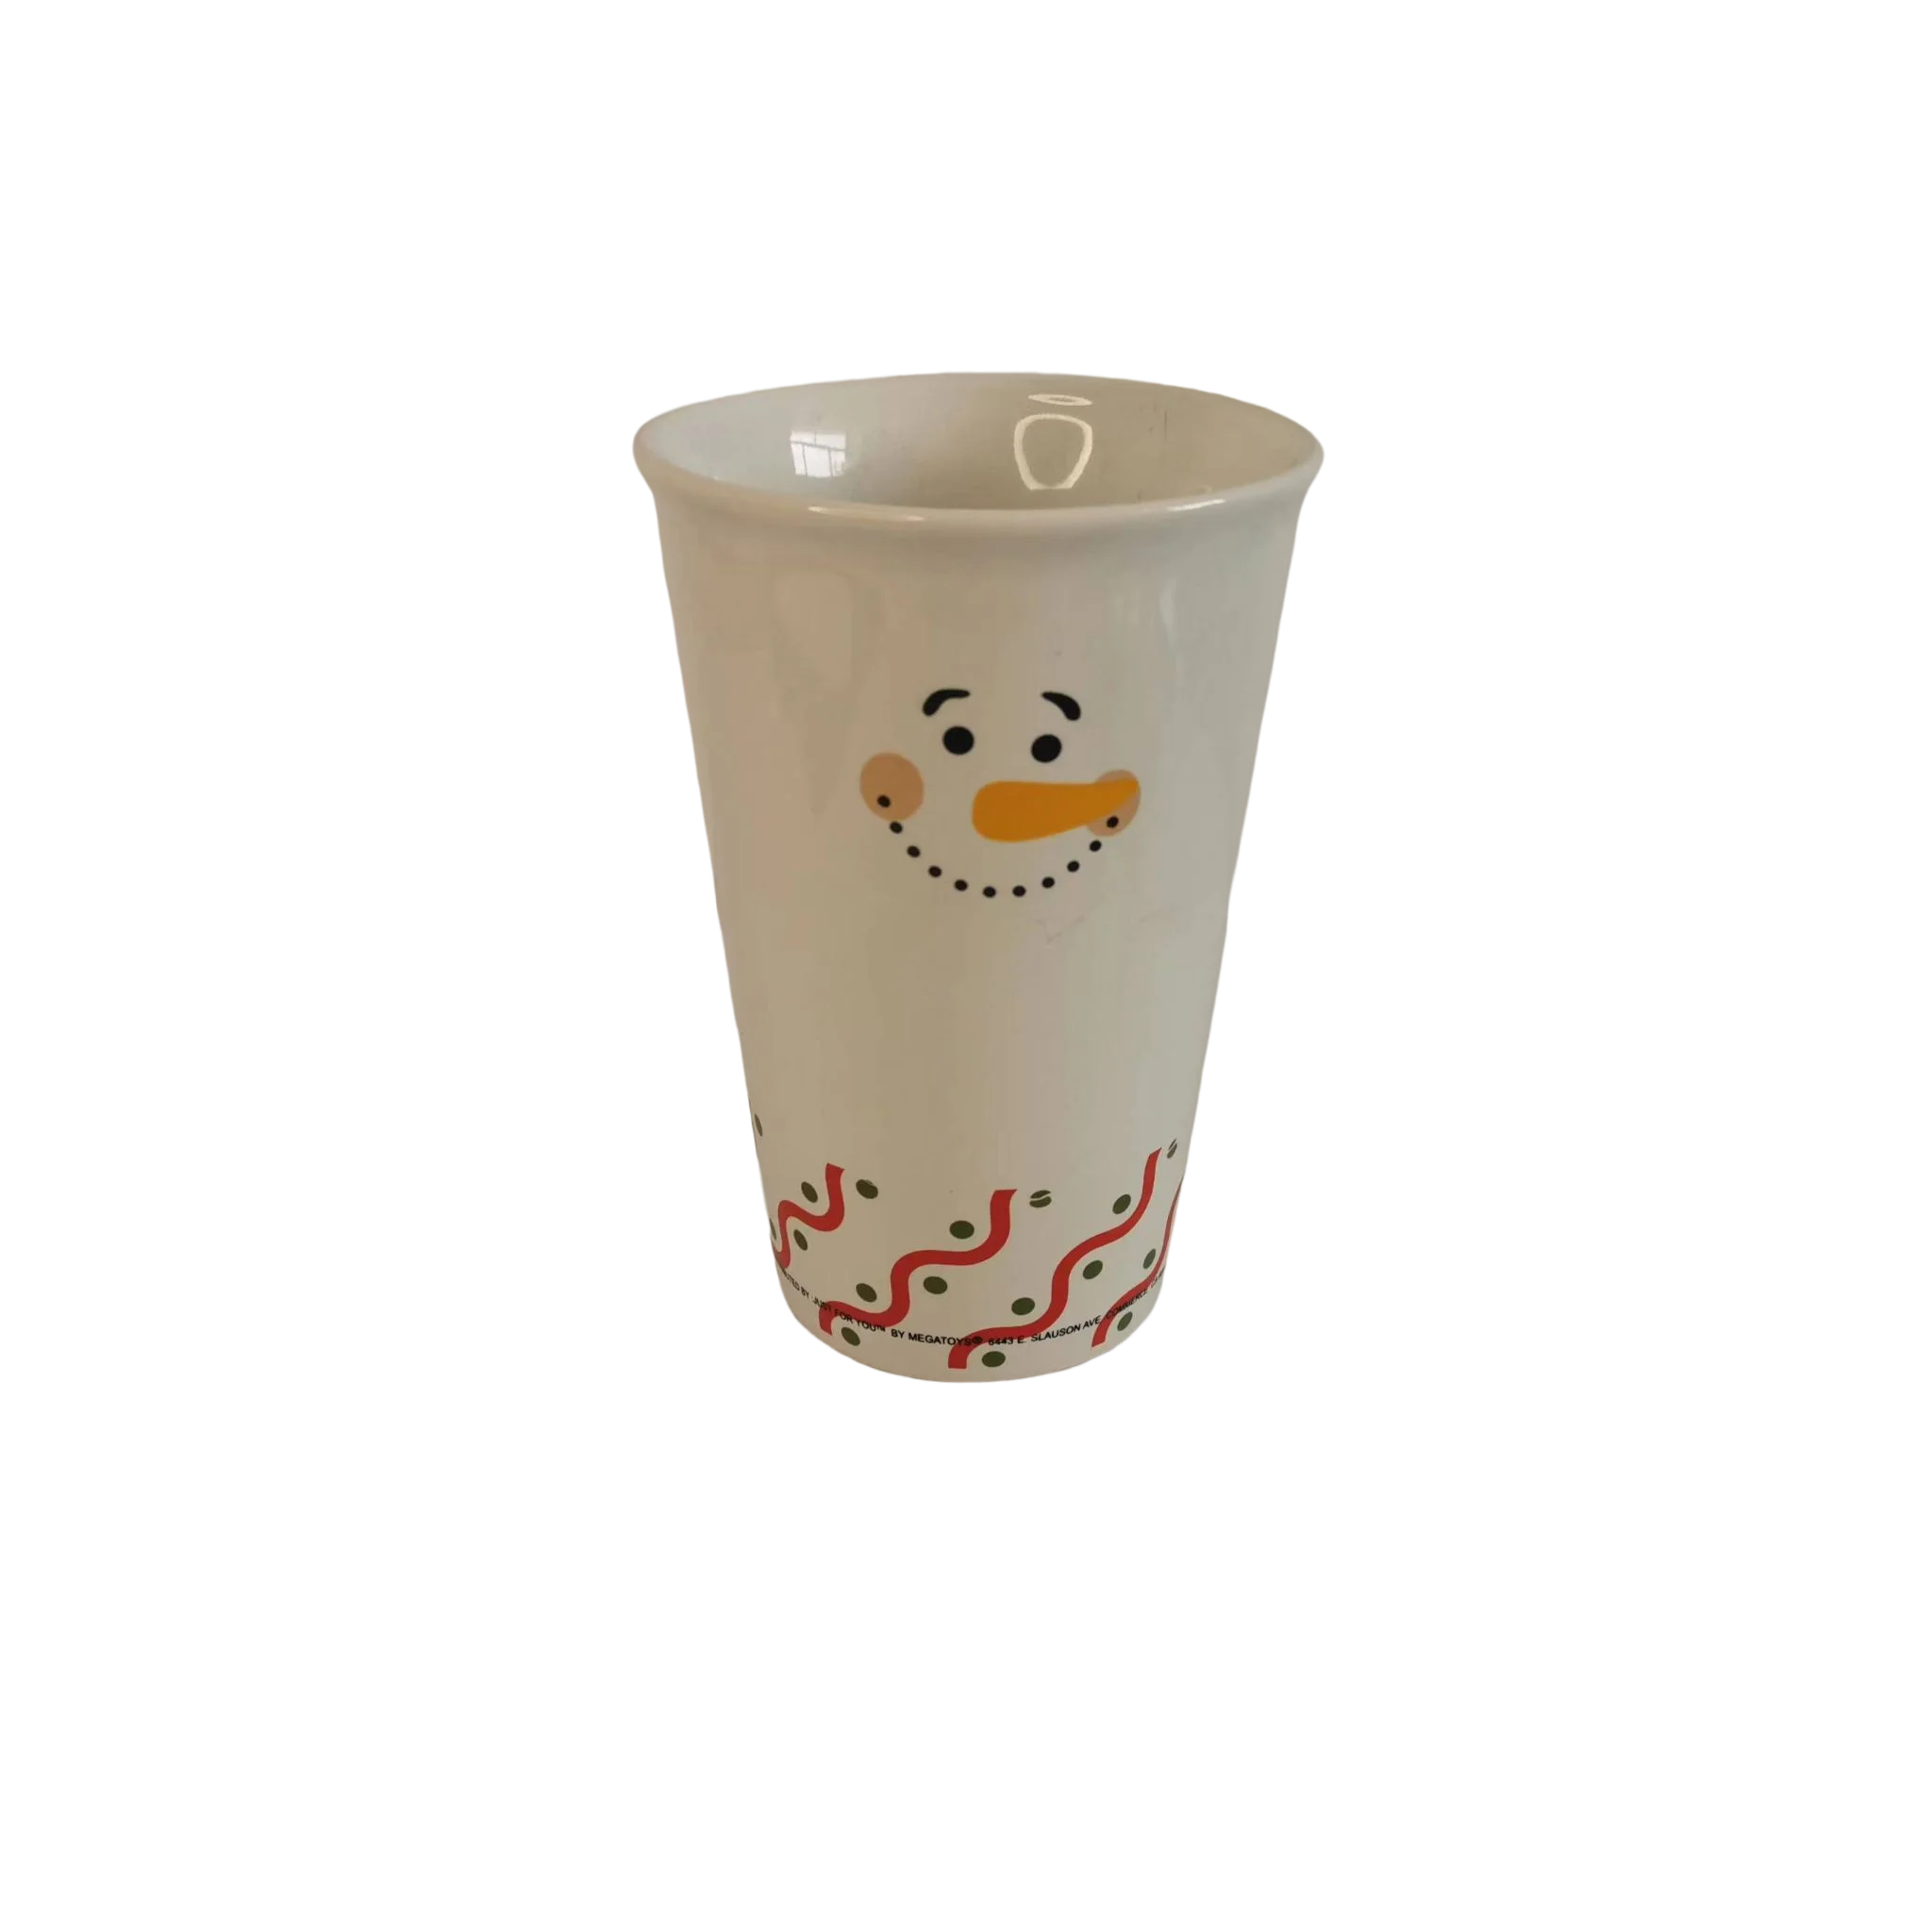 Sunmeta two tone mug ceramic cups 11oz handle solid color inside coffee mugs for sublimation printing ceramic mugs